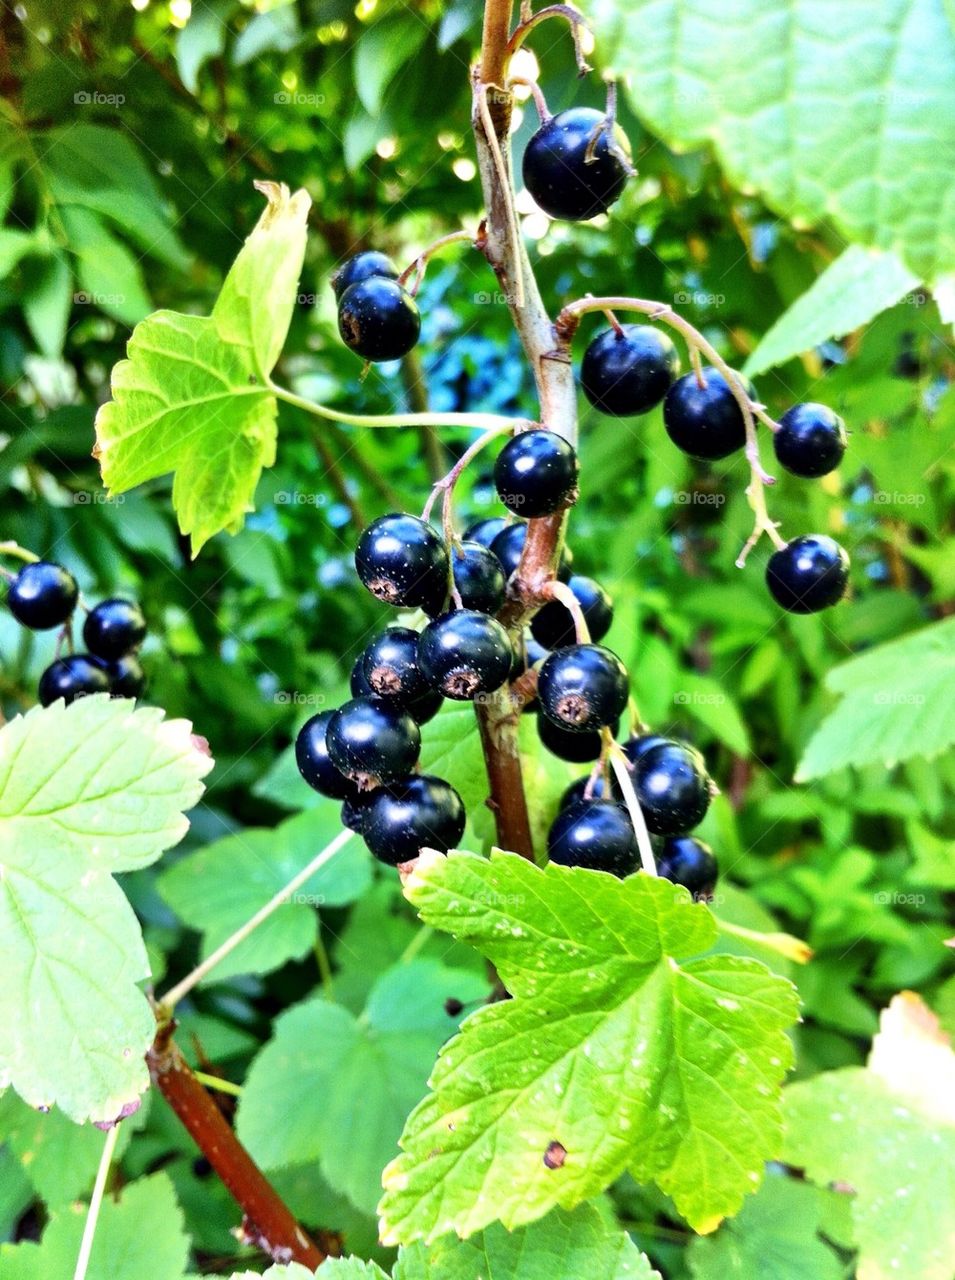 Black currant bush with ripen berries.